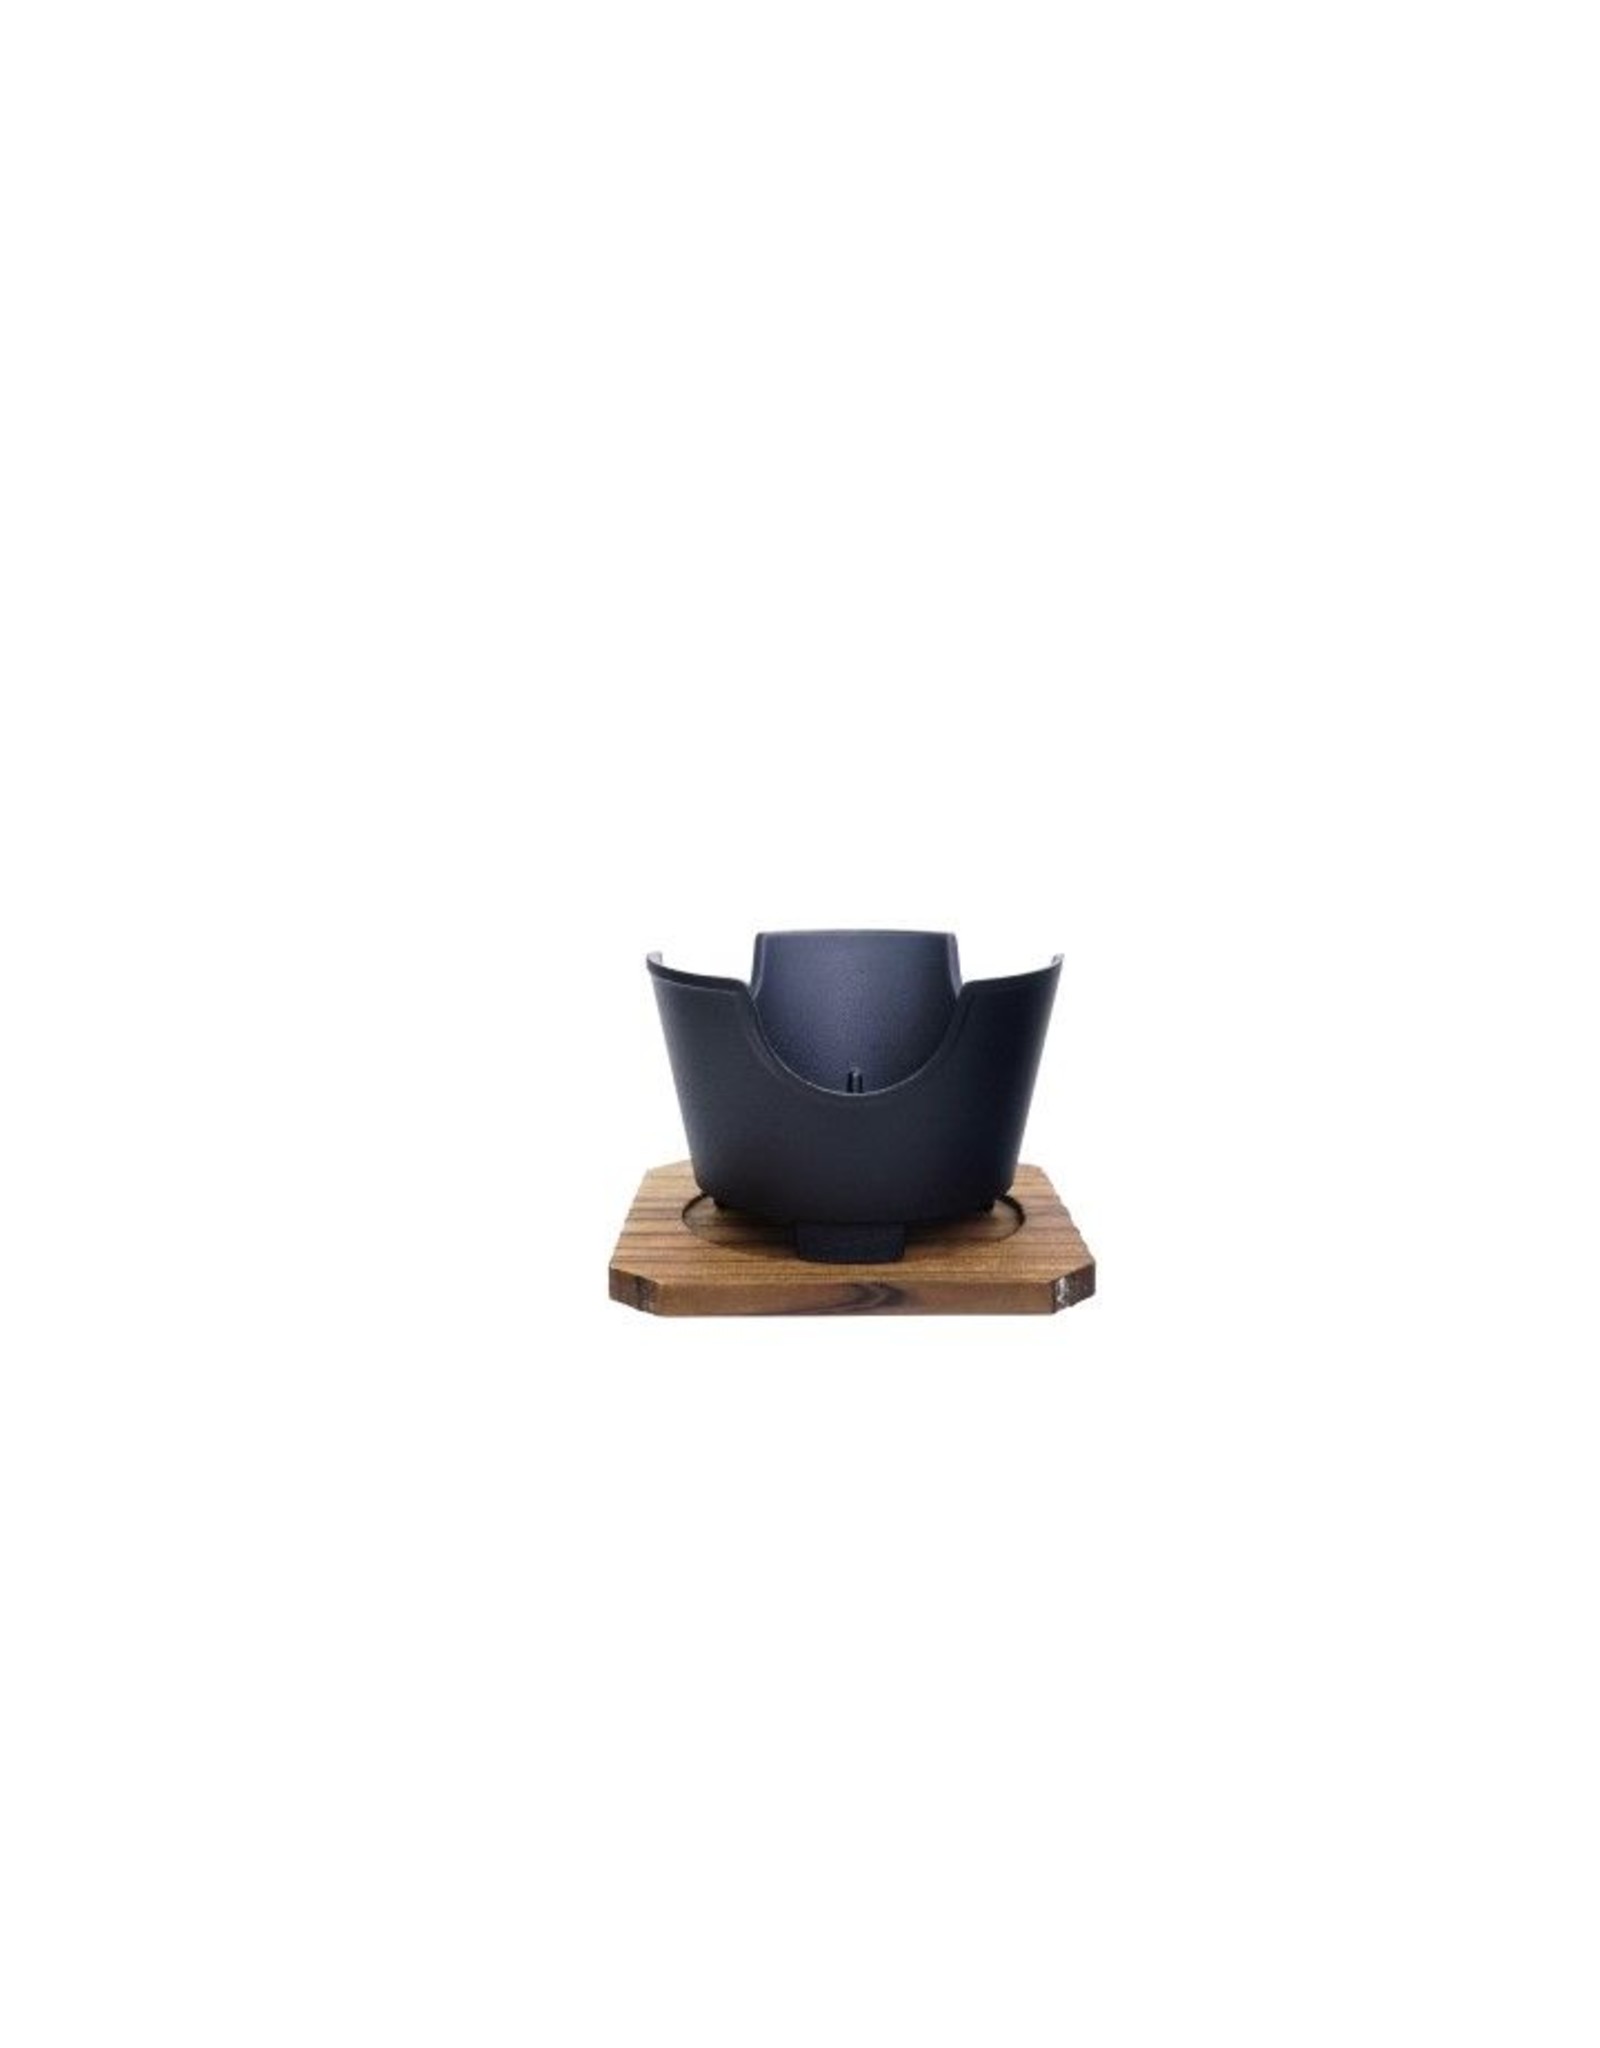 Tokyo Design Studio Nabe cooking pot warmer with wooden base 12cm